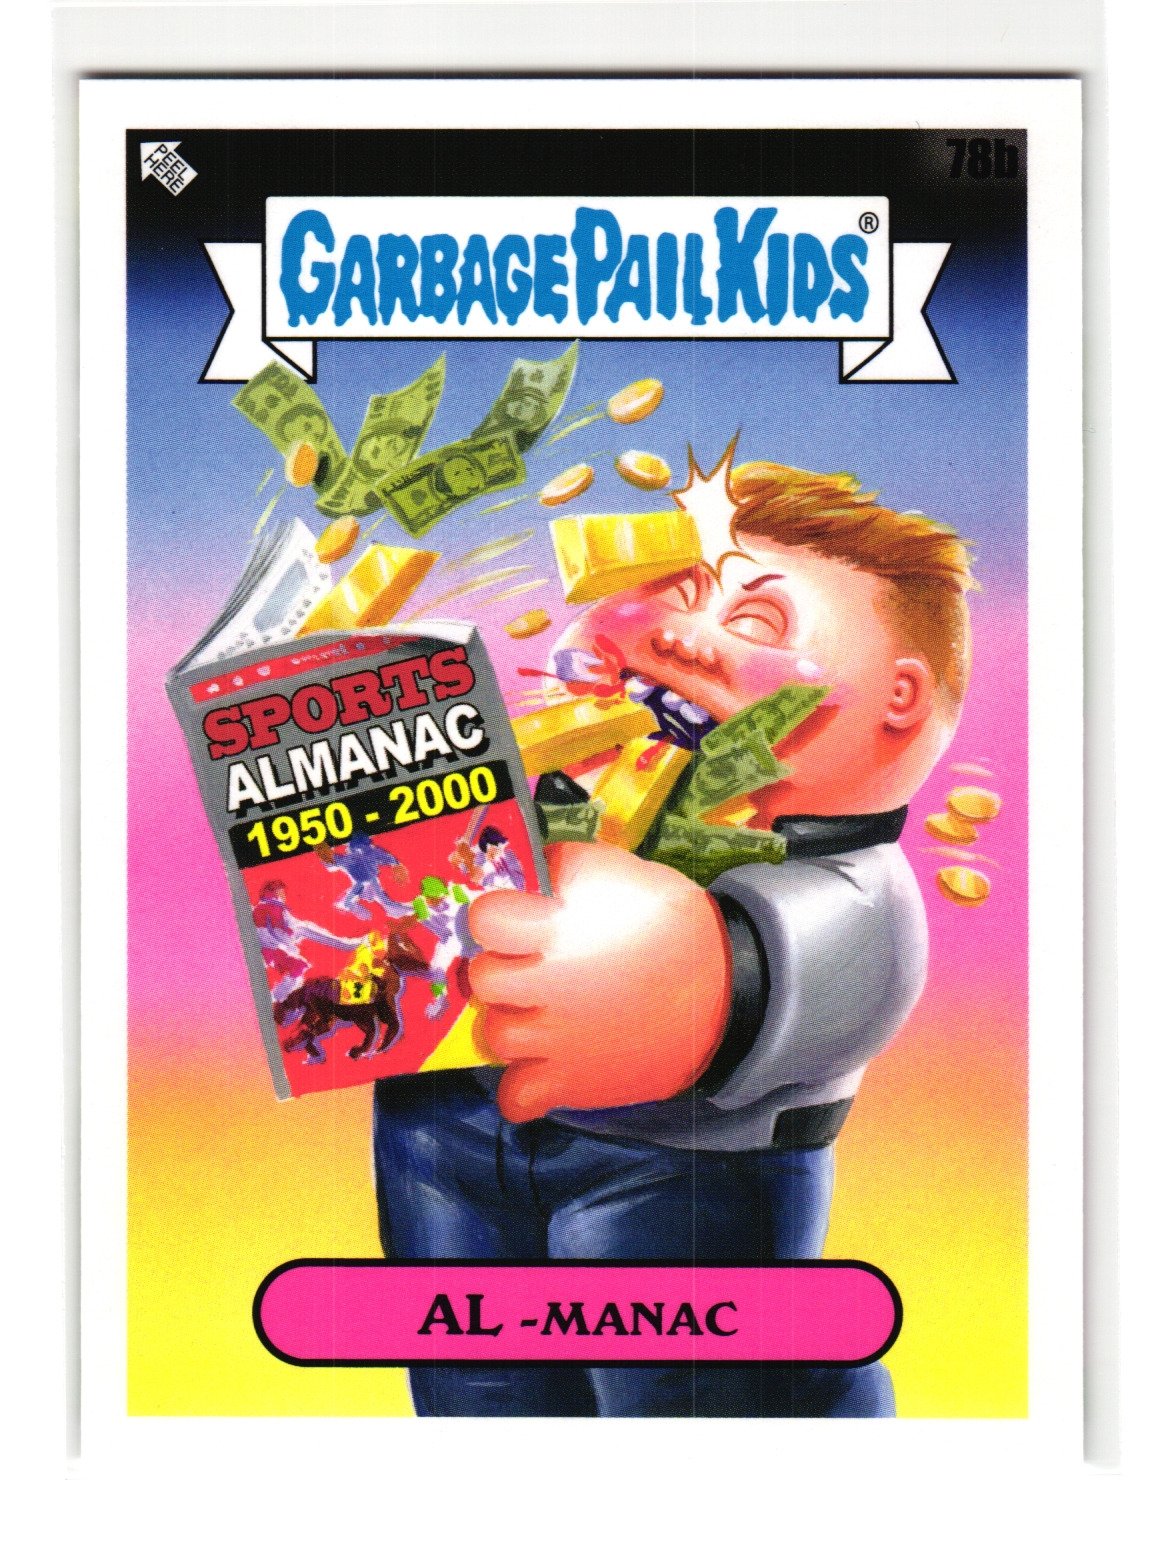 Al-Manac 2022 Garbage Pail Kids Book Worms Parody Card 78b